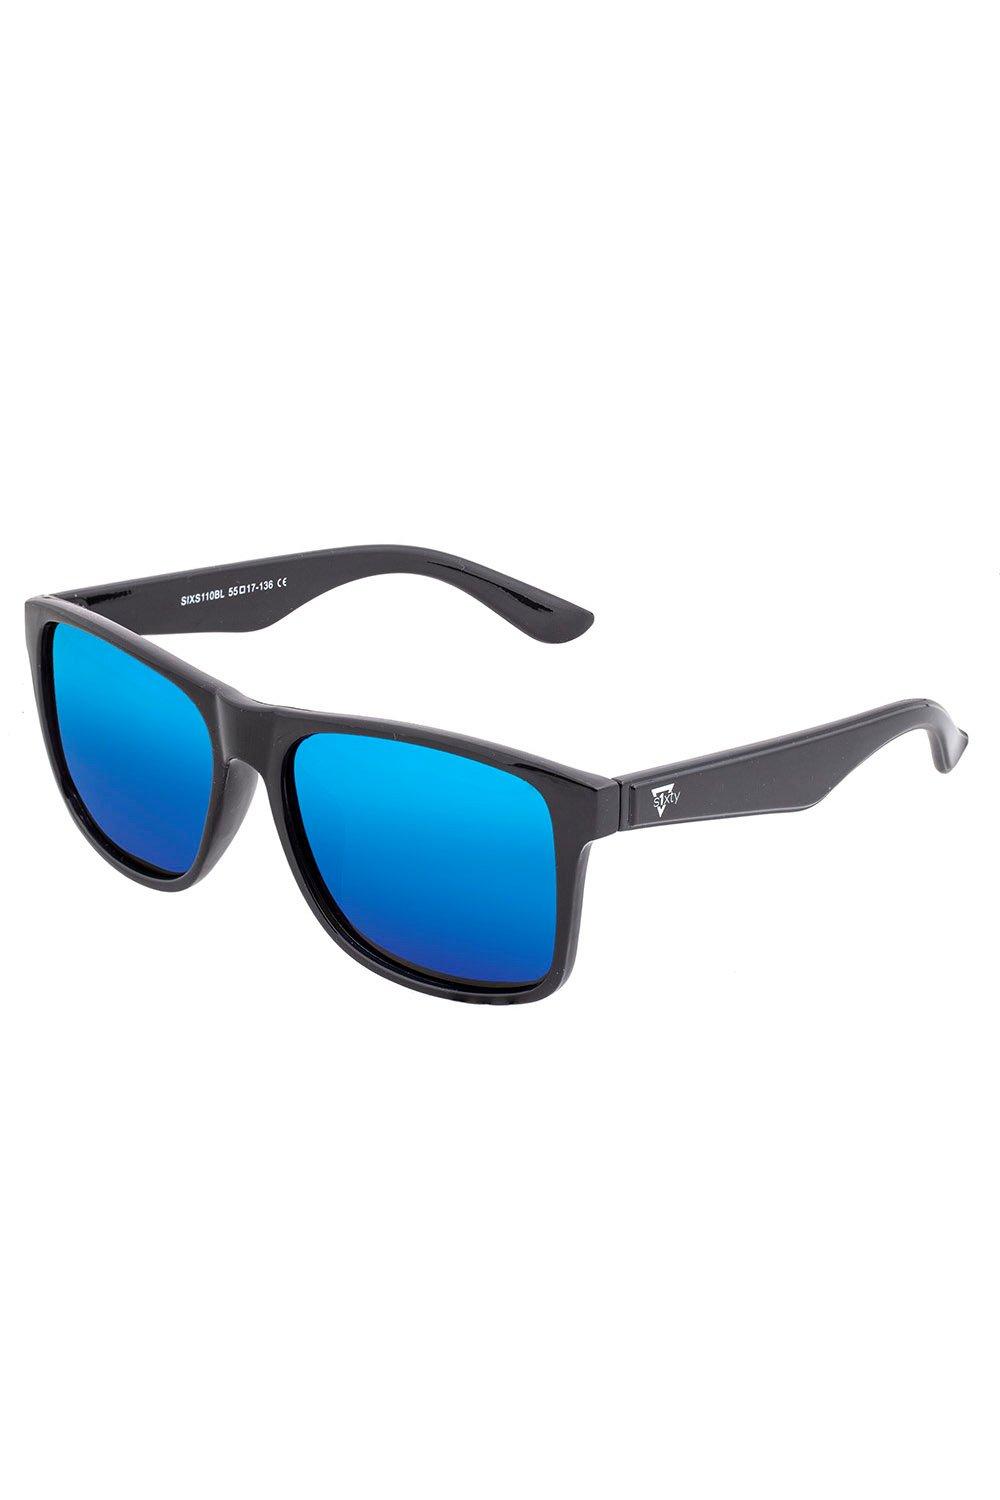 Solaro Polarized Sunglasses